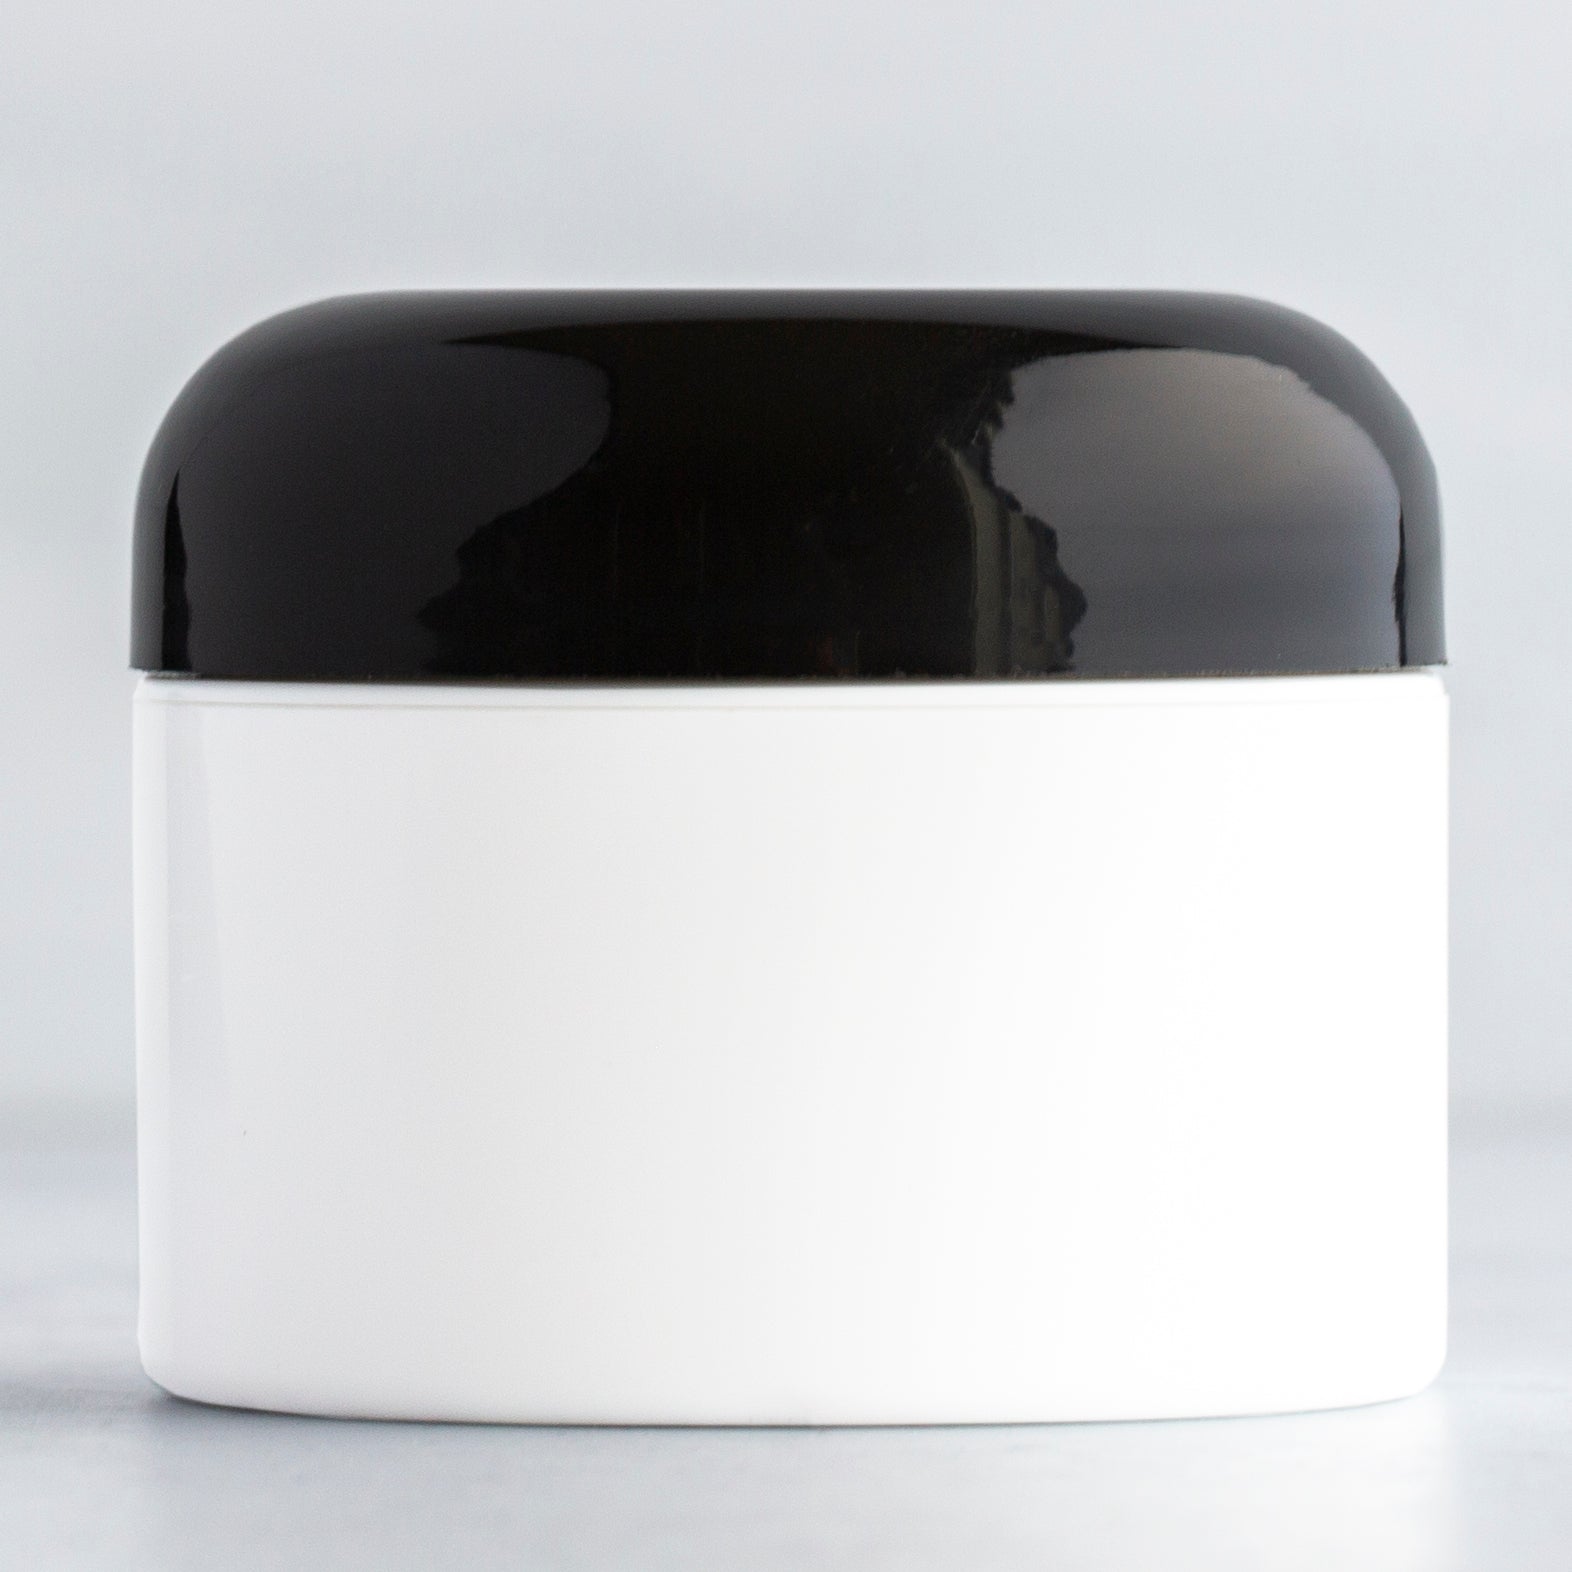 1 oz White Square Base Plastic Jar with Black Dome Cap